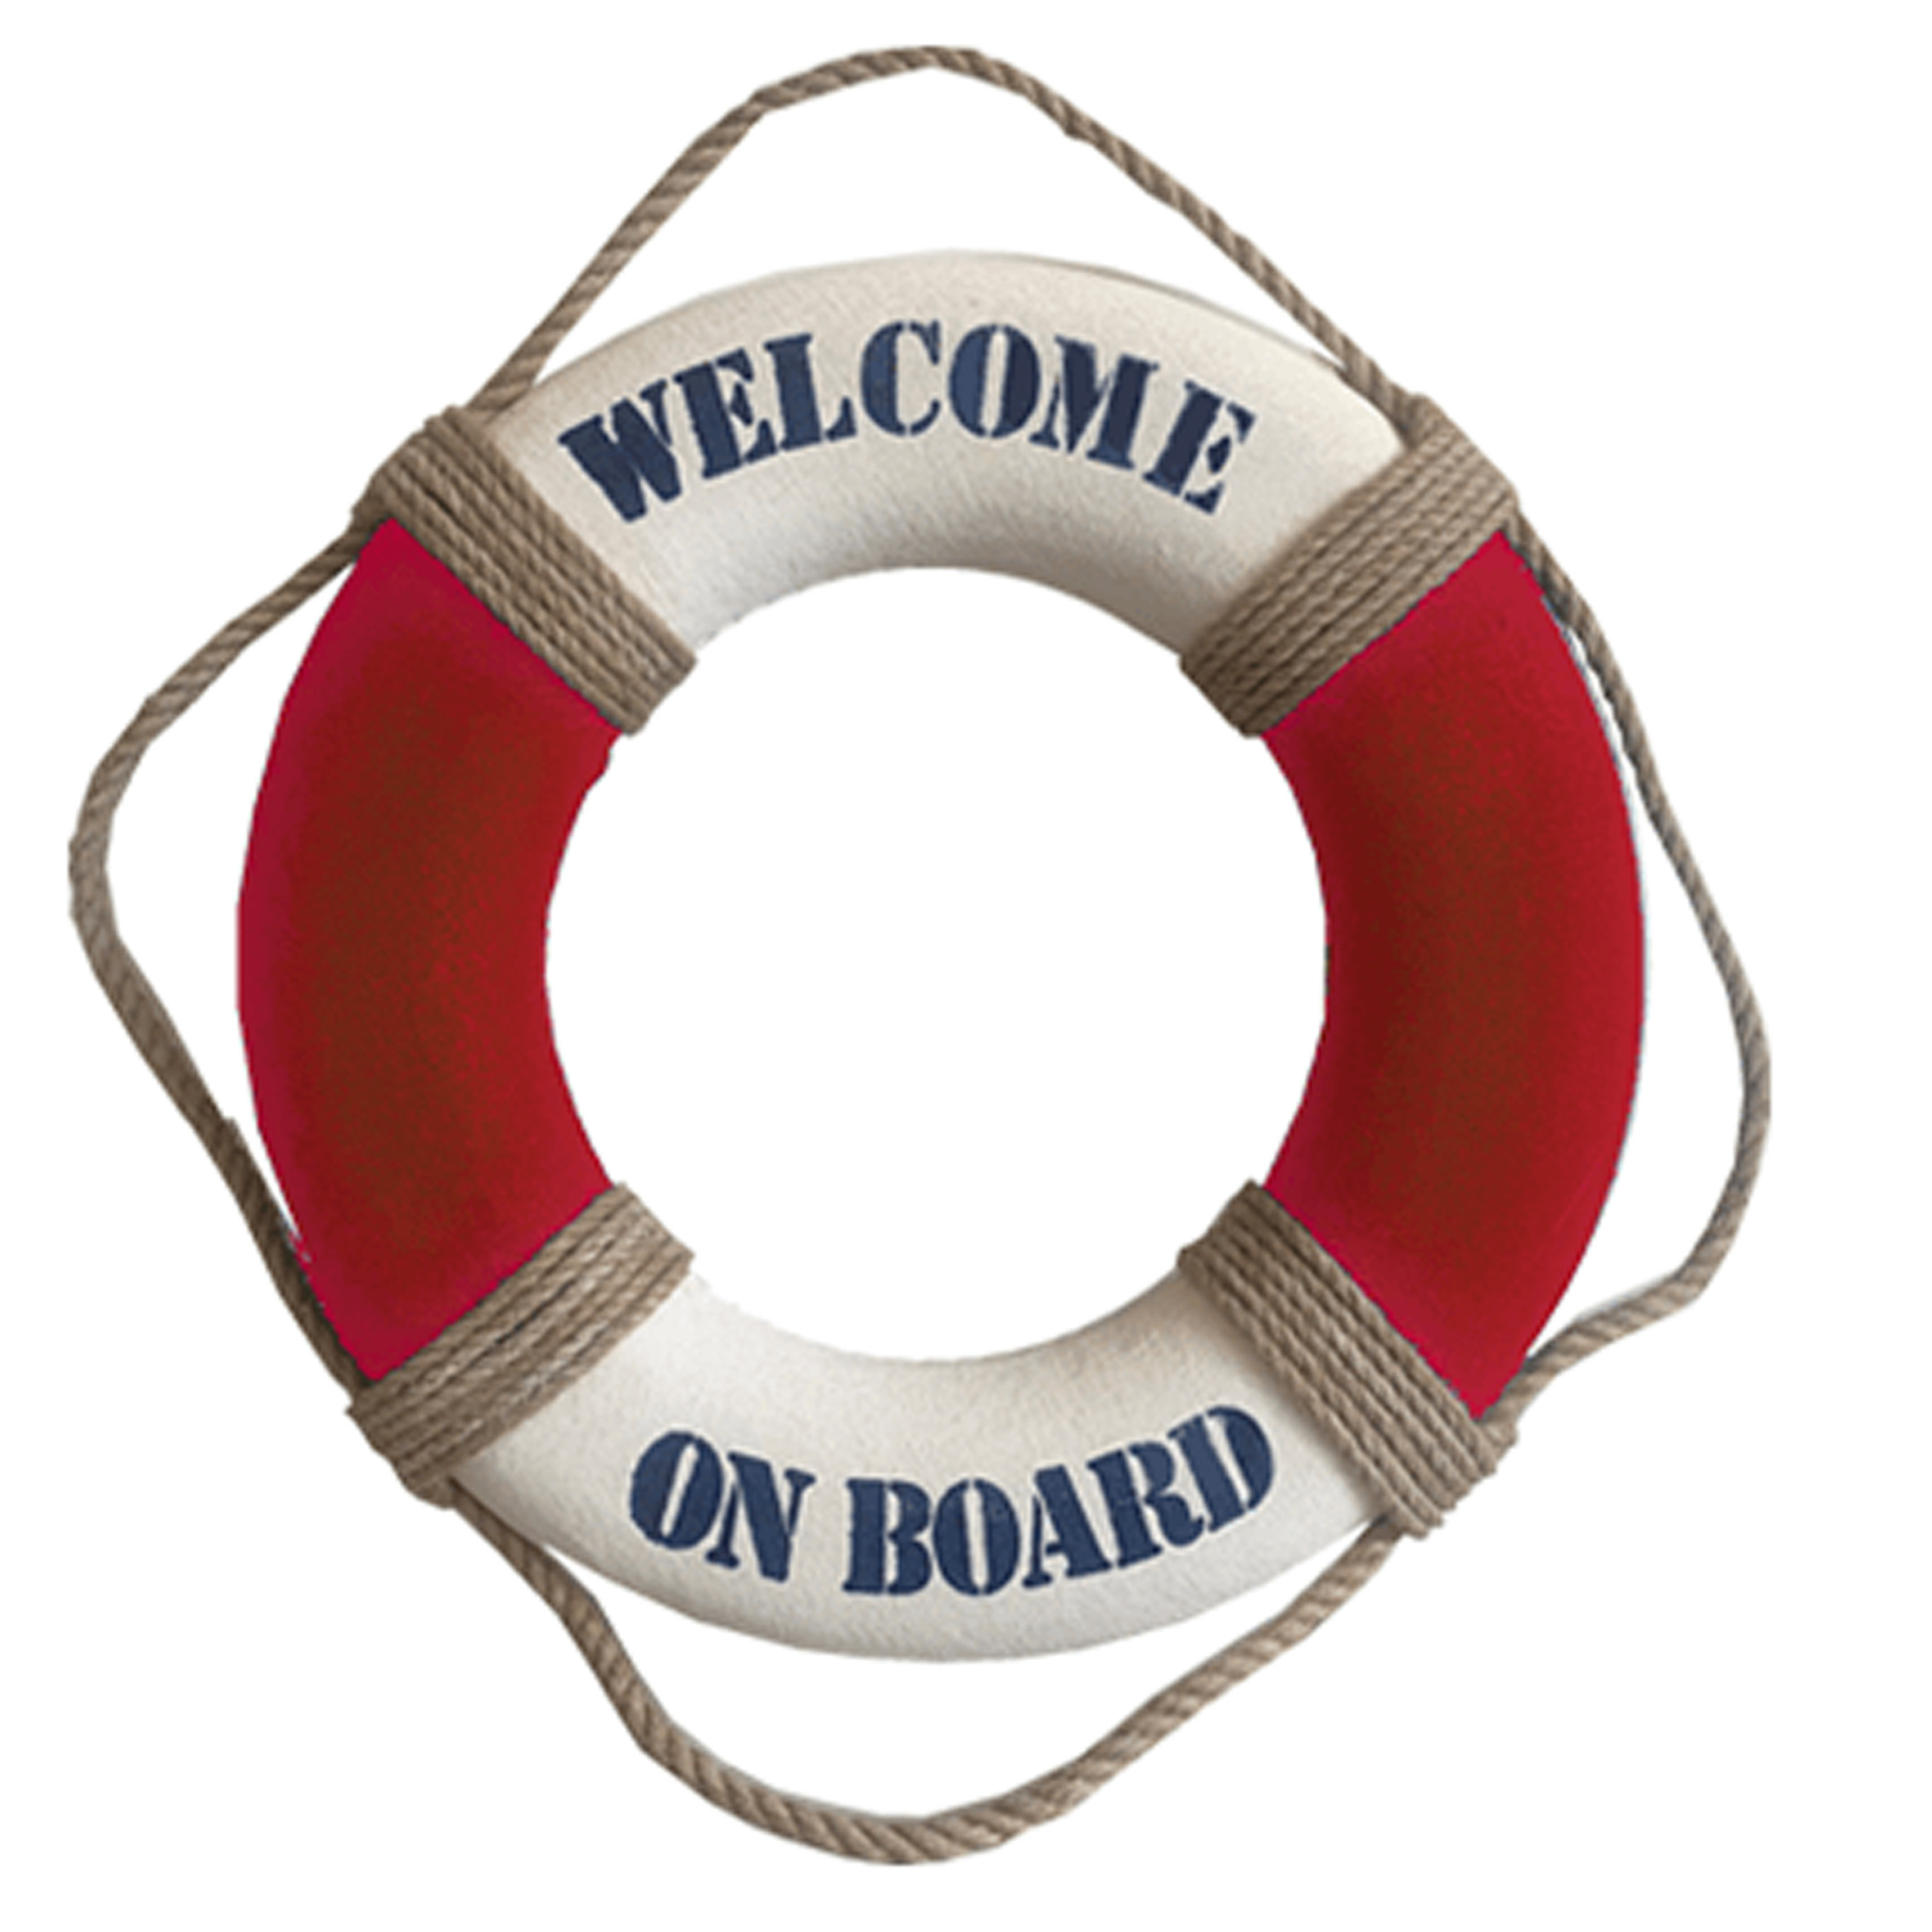 Reddingsboei Welcome on board 25 cm rood wit kunststof maritiem thema decoratie